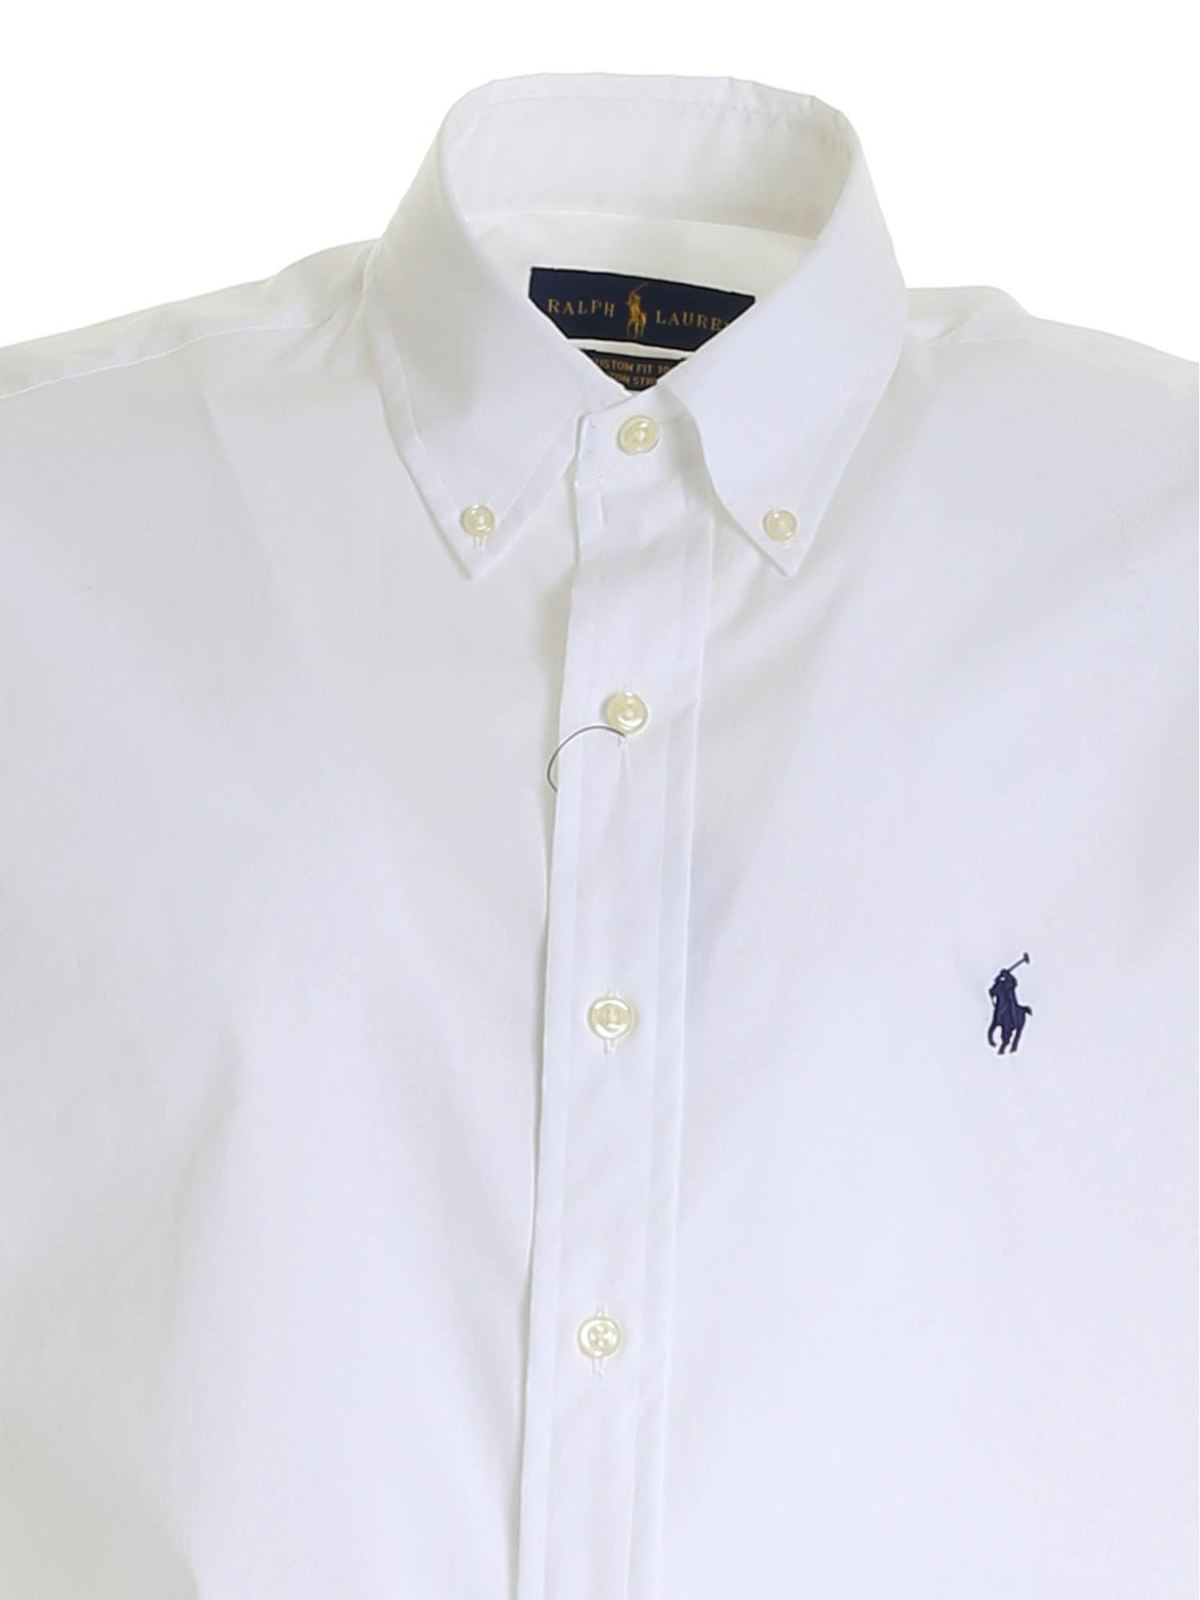 Lleno Sada cilindro Camisas Polo Ralph Lauren - Camisa - Blanco - 710795273002 | iKRIX.com